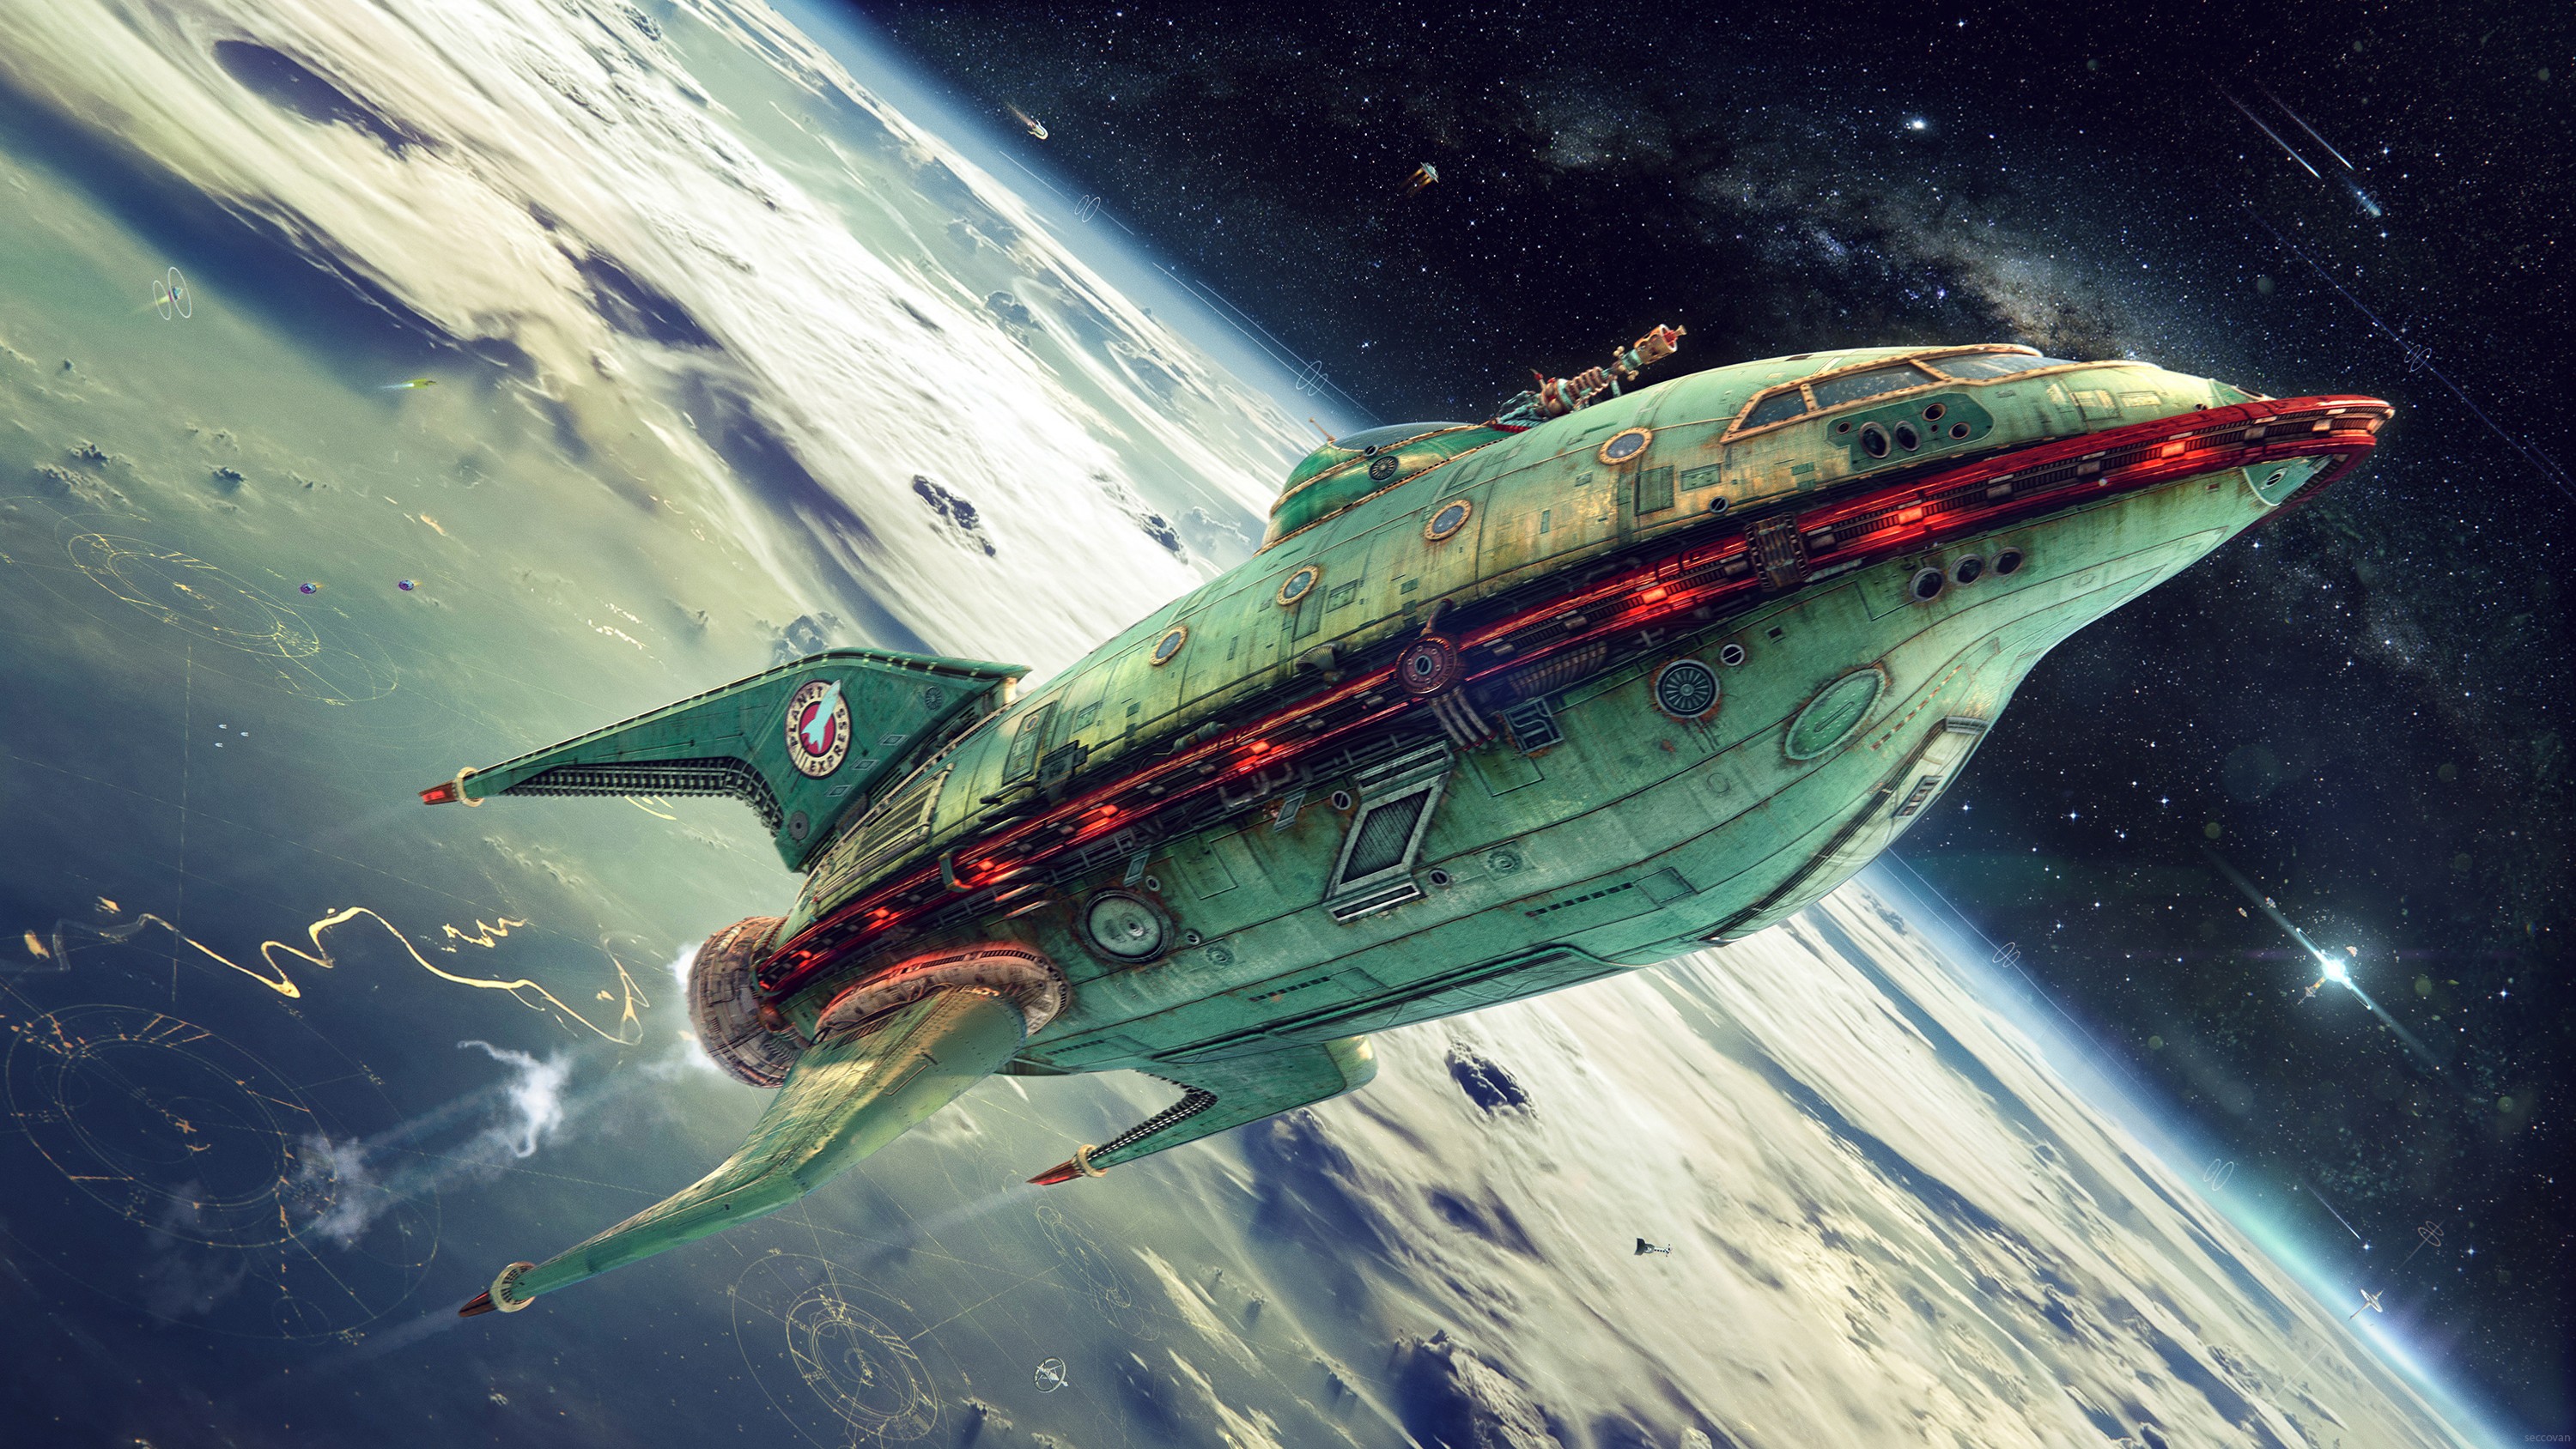 General 3000x1688 Futurama planet express spaceship TV series vehicle science fiction planet digital art